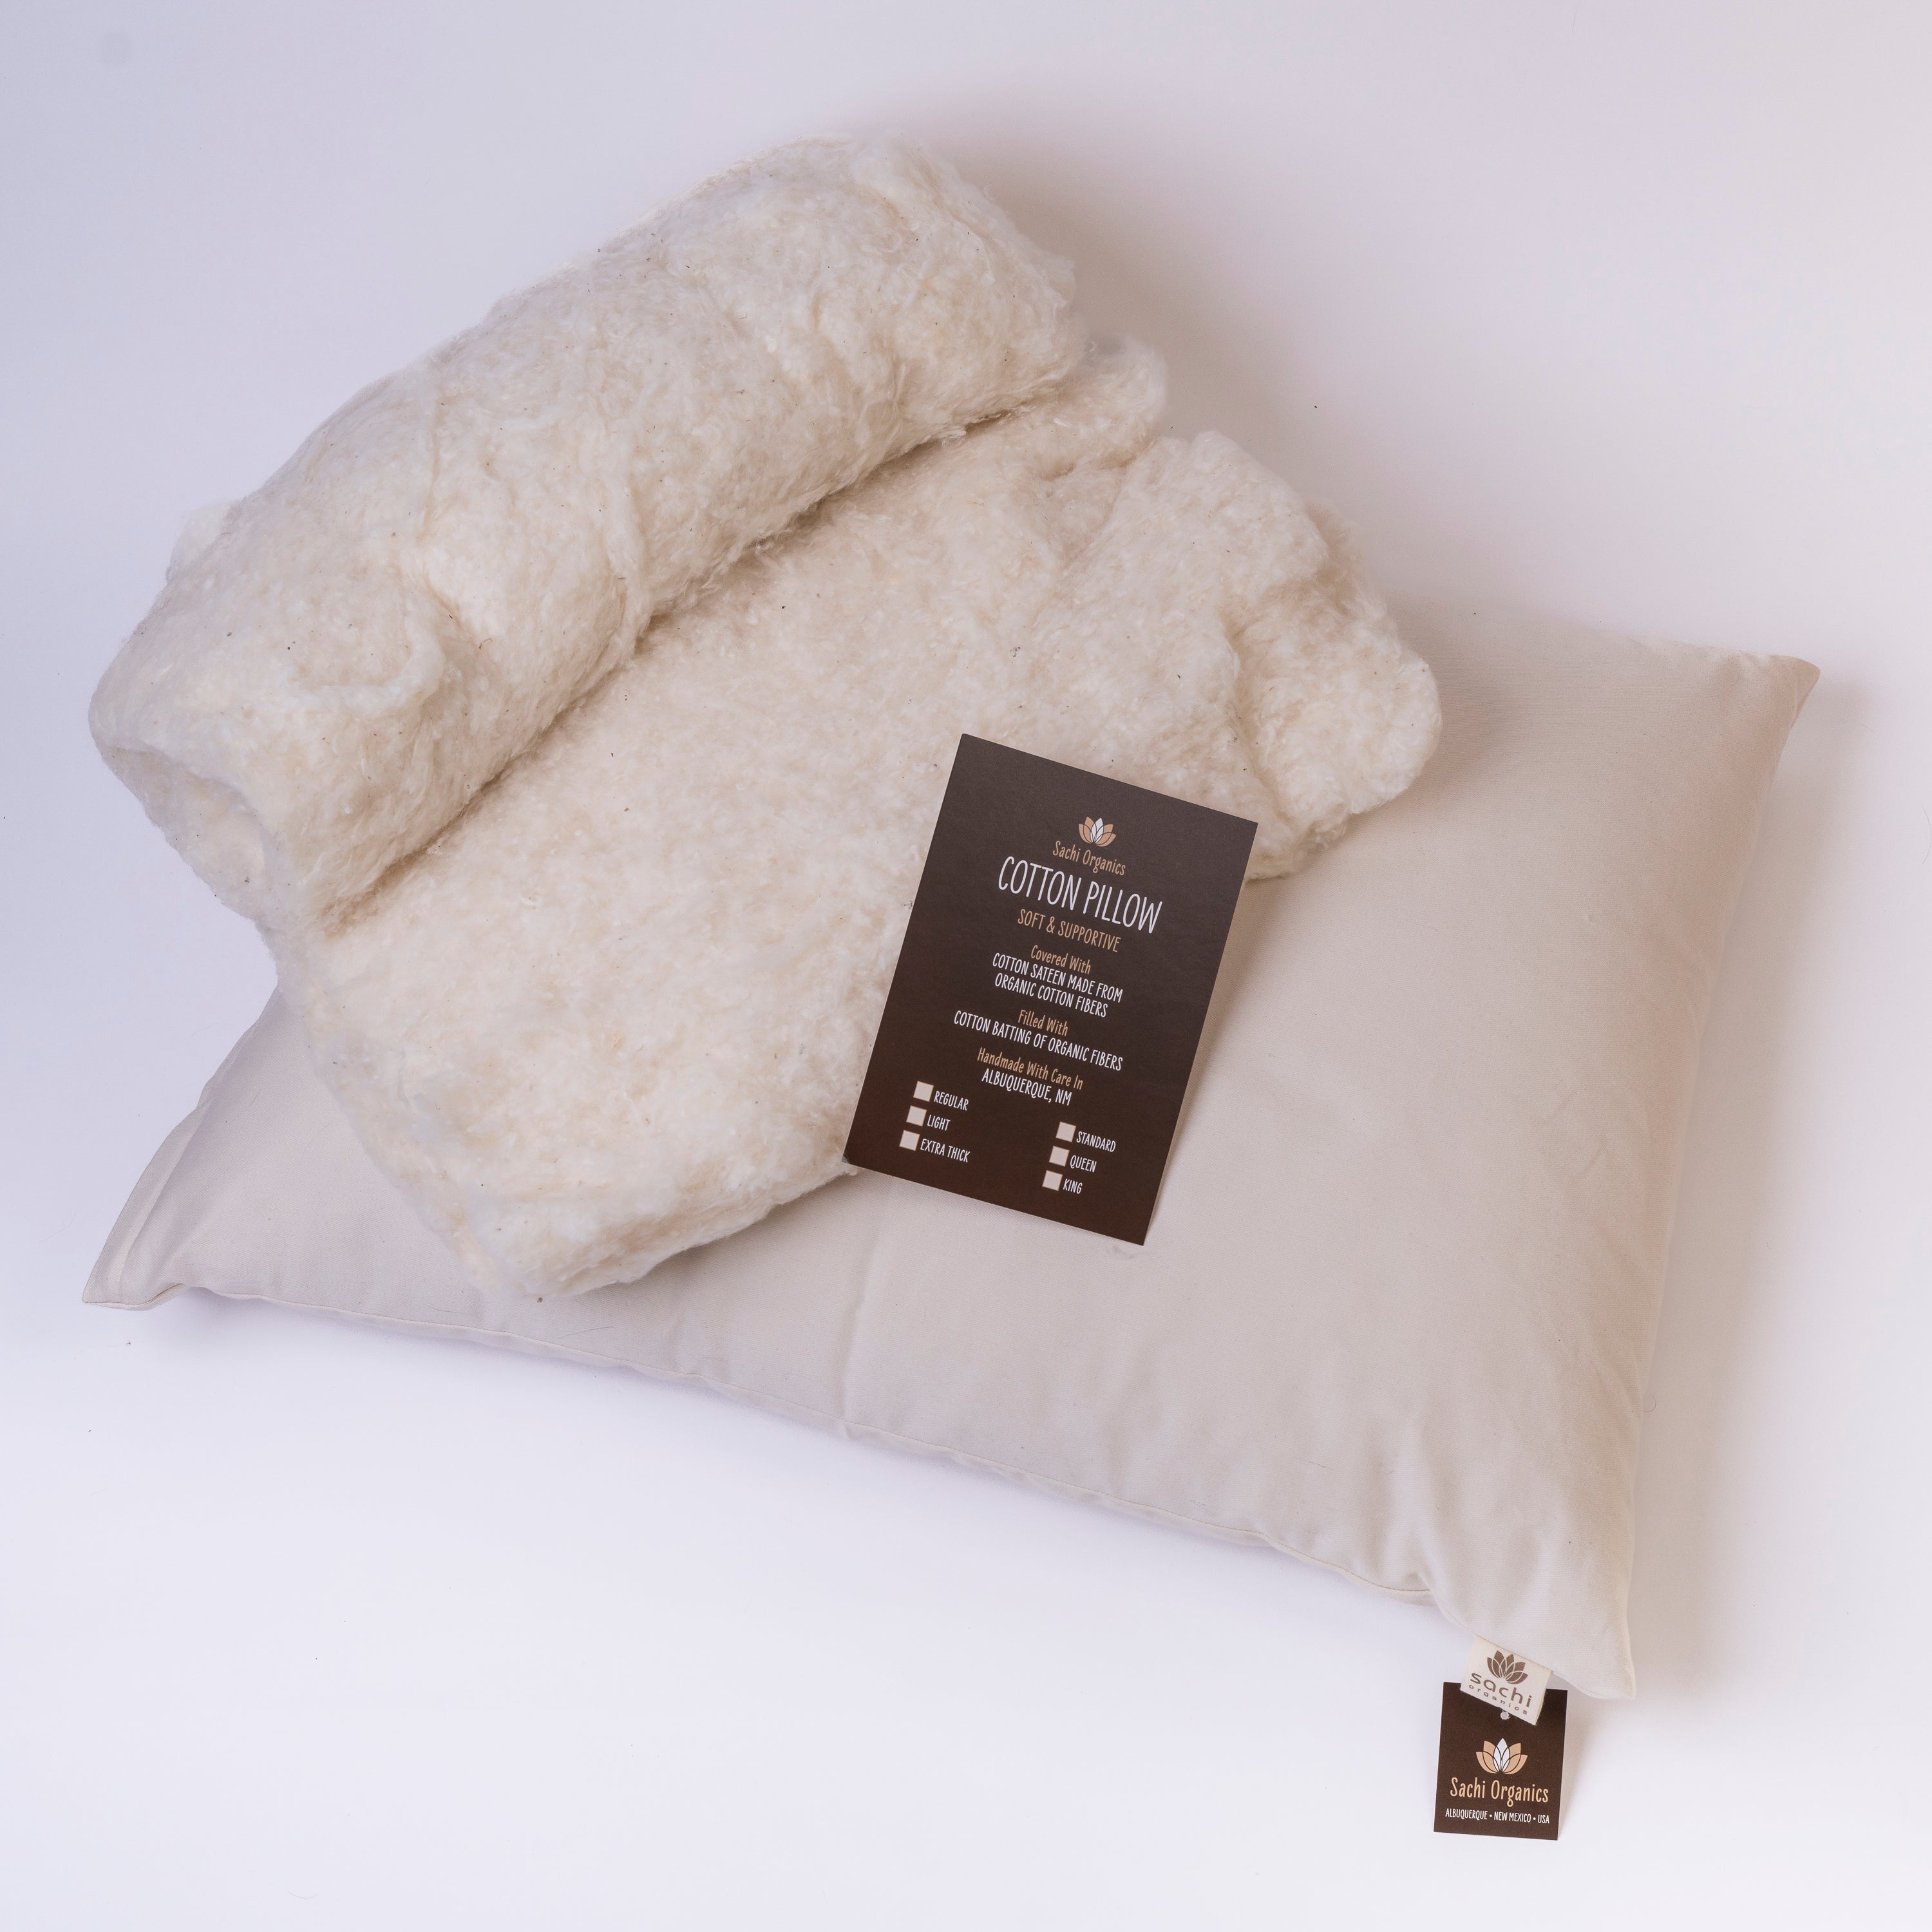 Extra soft high quality wool blanket , Throw Travel, Meditation